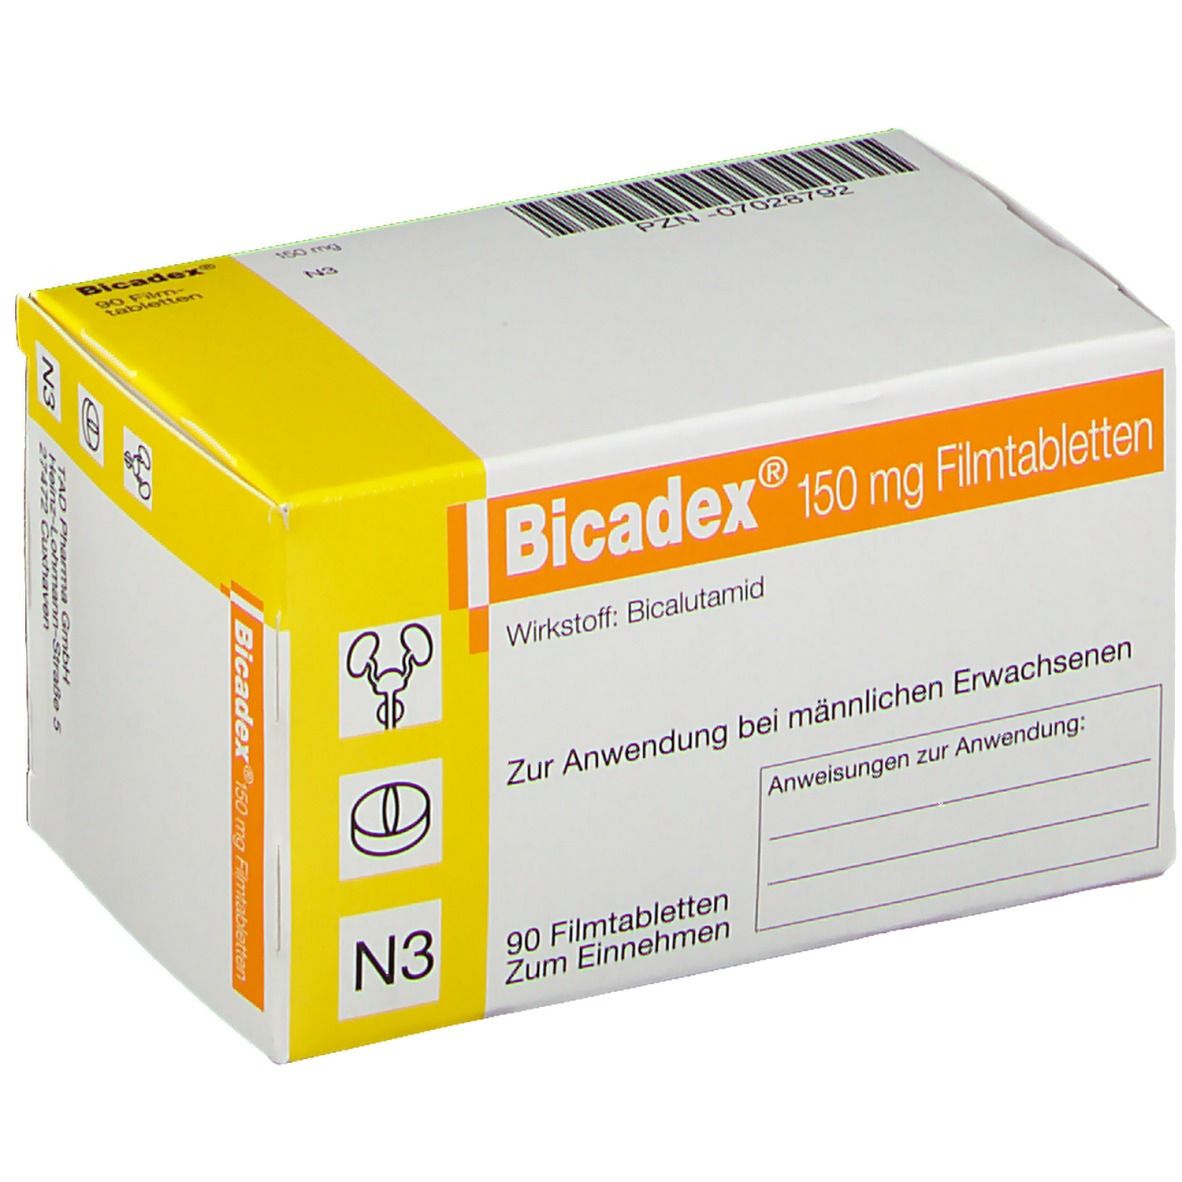 Bicadex® 150 mg